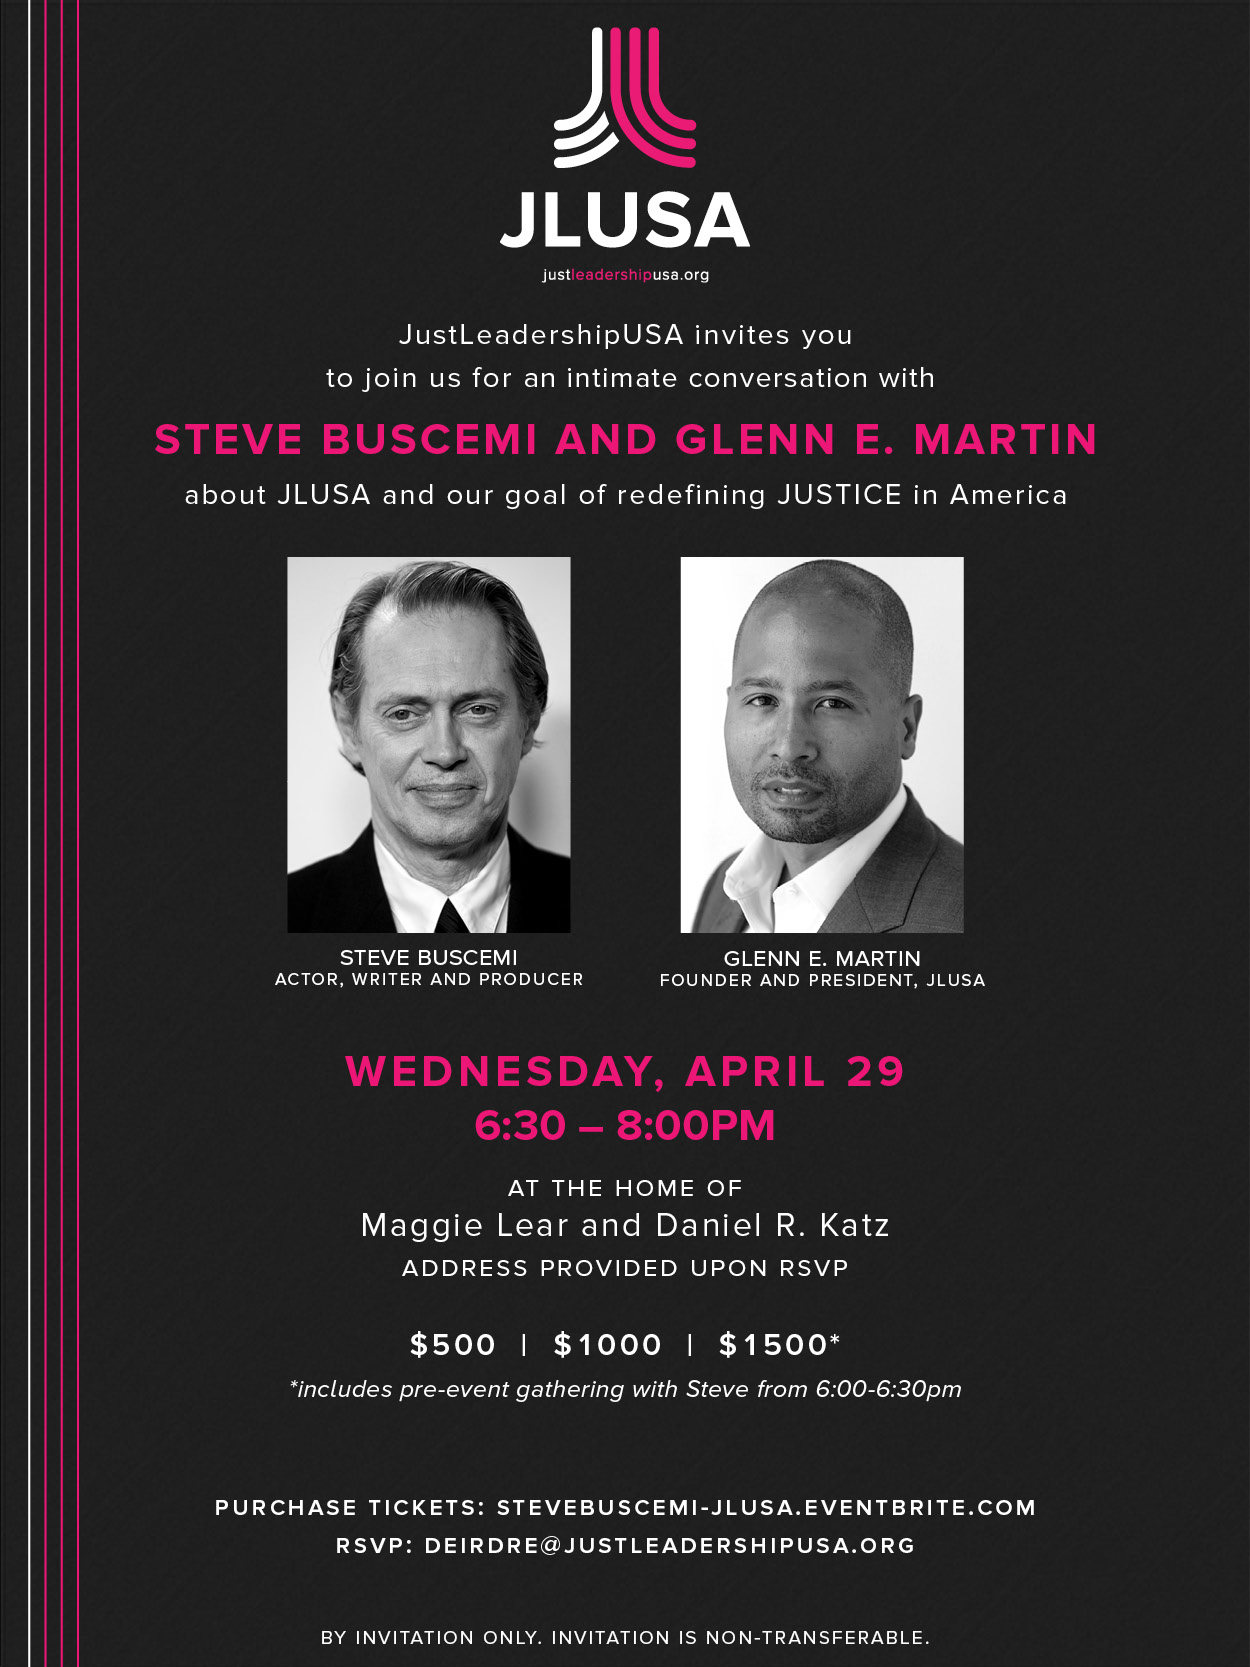 JustLeadershipUSA: A Conversation between Steve Buscemi and Glenn E. Martin